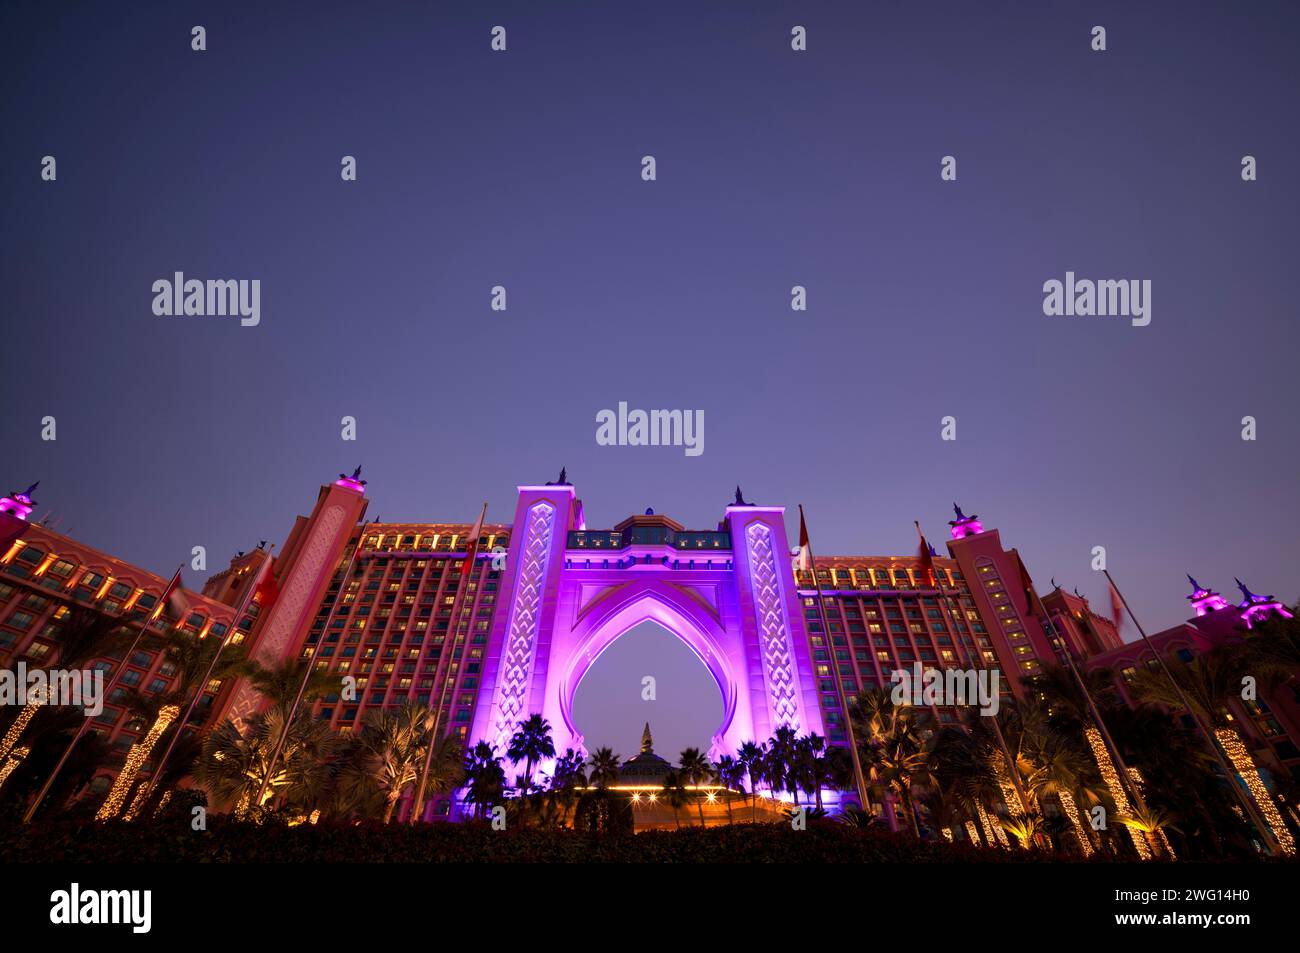 Night shot Hotel Atlantis, Illumination, The Palm Jumeirah, Dubai, United Arab Emirates, VAR Stock Photo